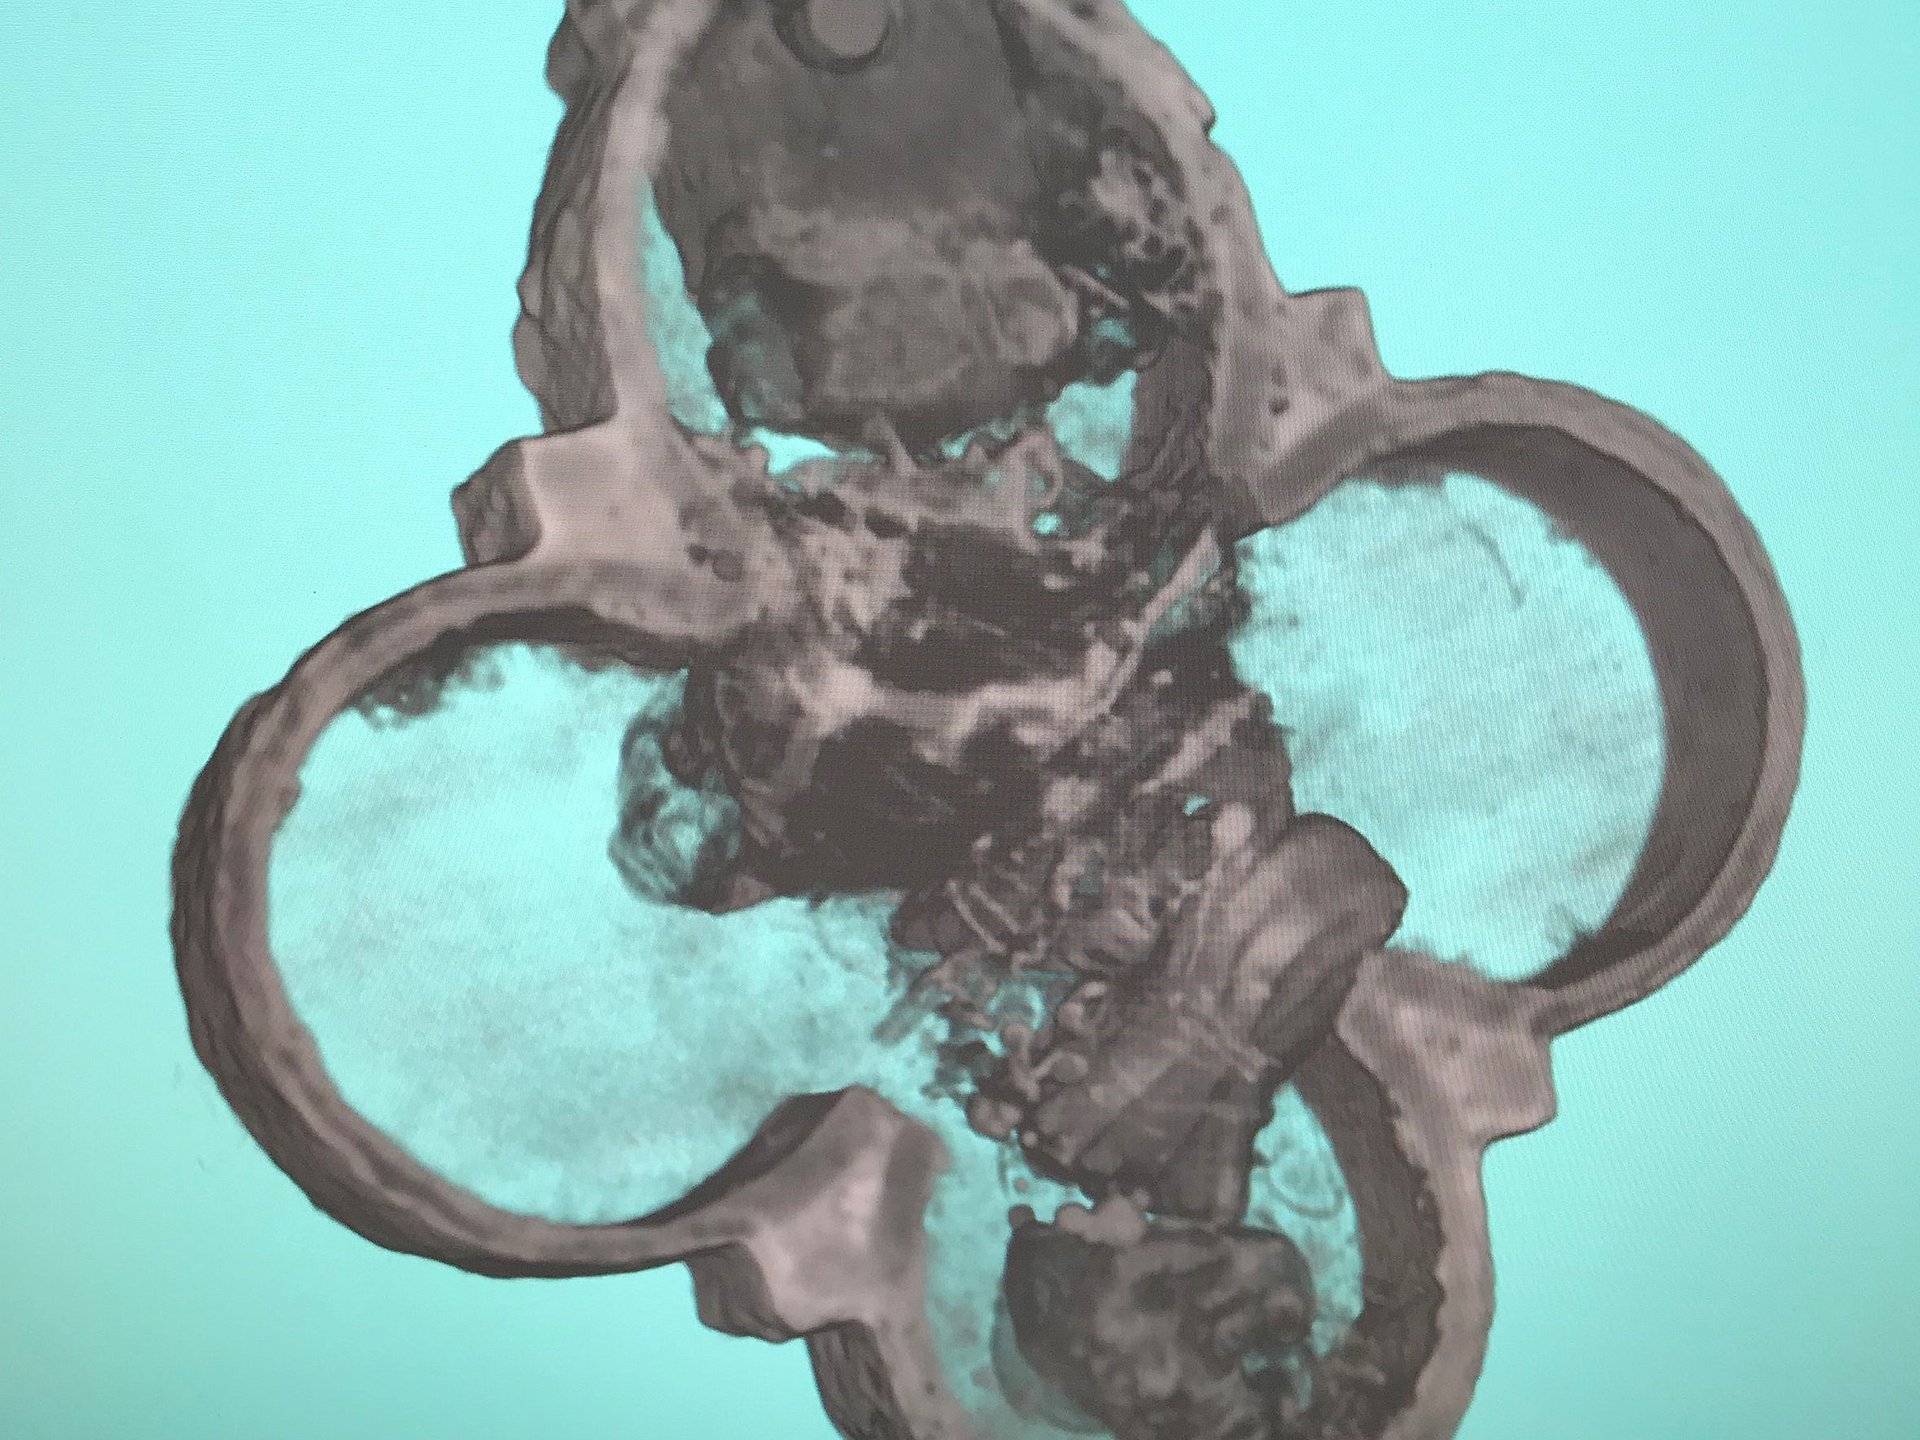 Neutron tomography shows the interior of the relic pendant.